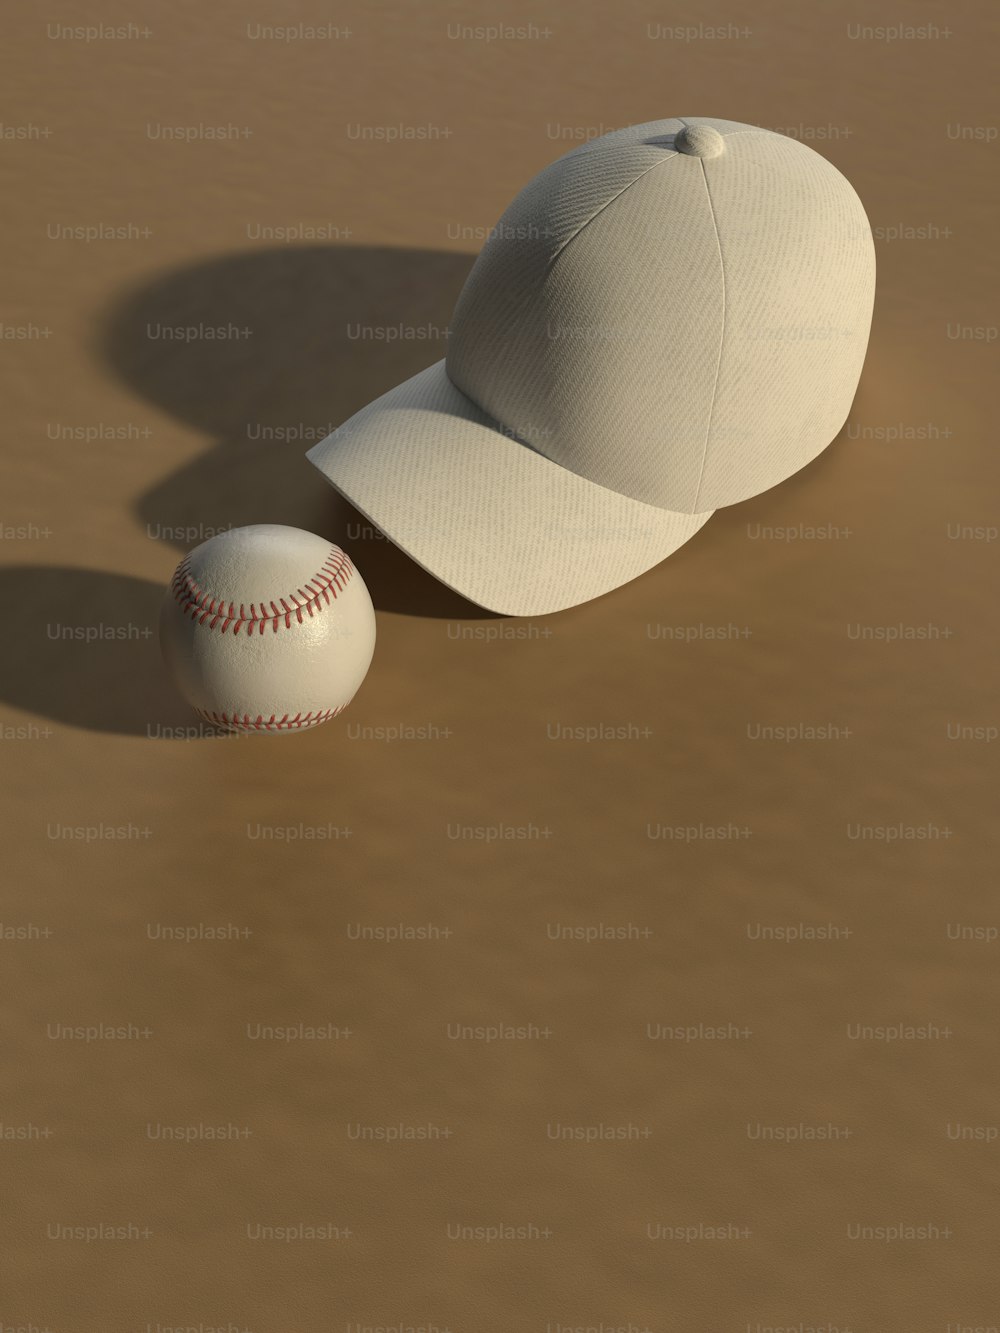 a baseball and a baseball cap on a brown surface